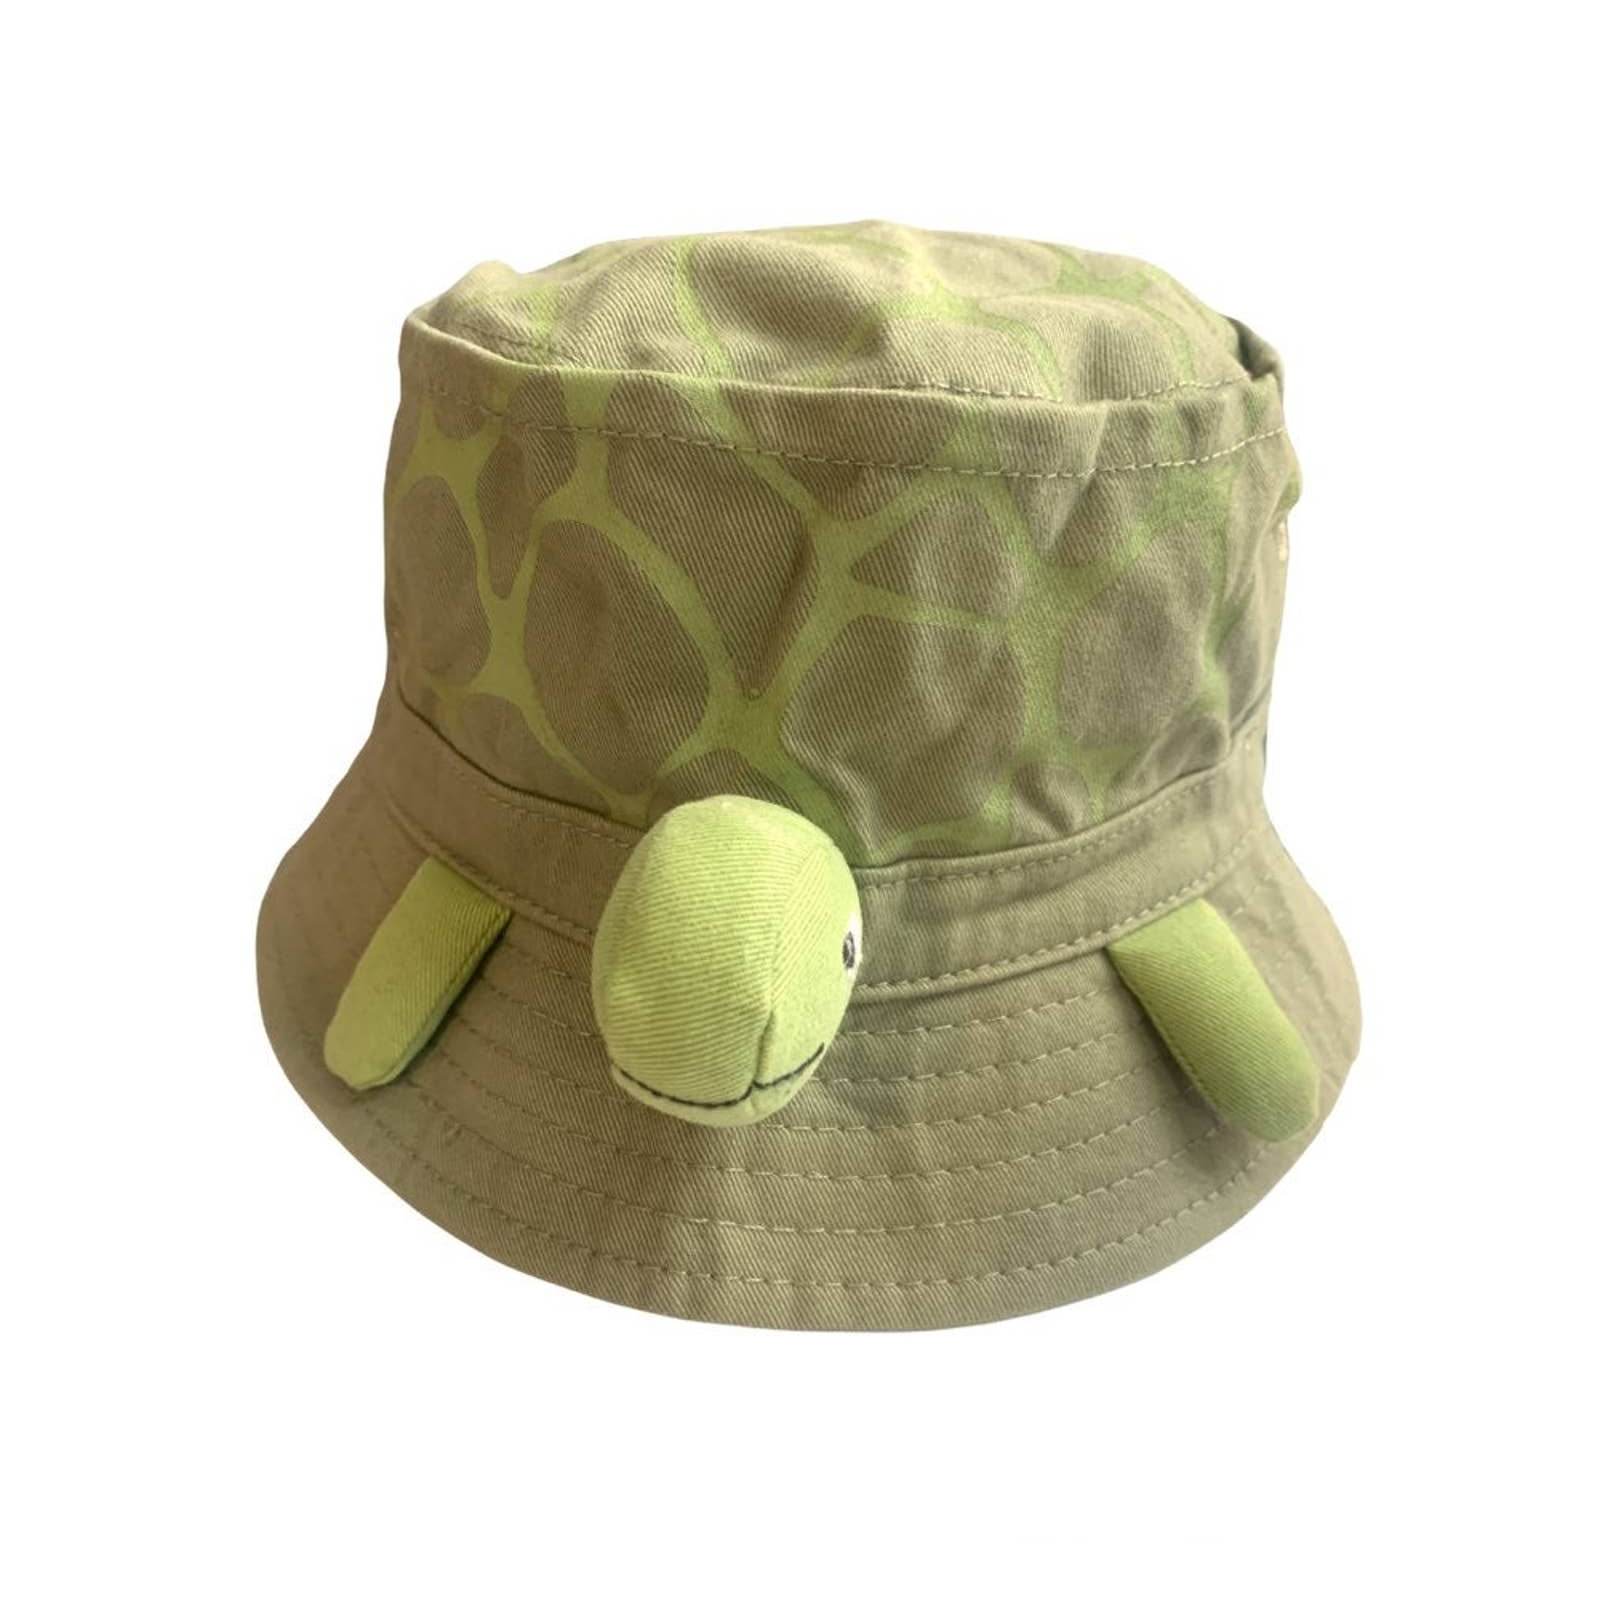 Kids Gymboree Finally Complete Free Shipping popular brand Bucket Hat Size 2T-3T Green Design Turtle Lightwei